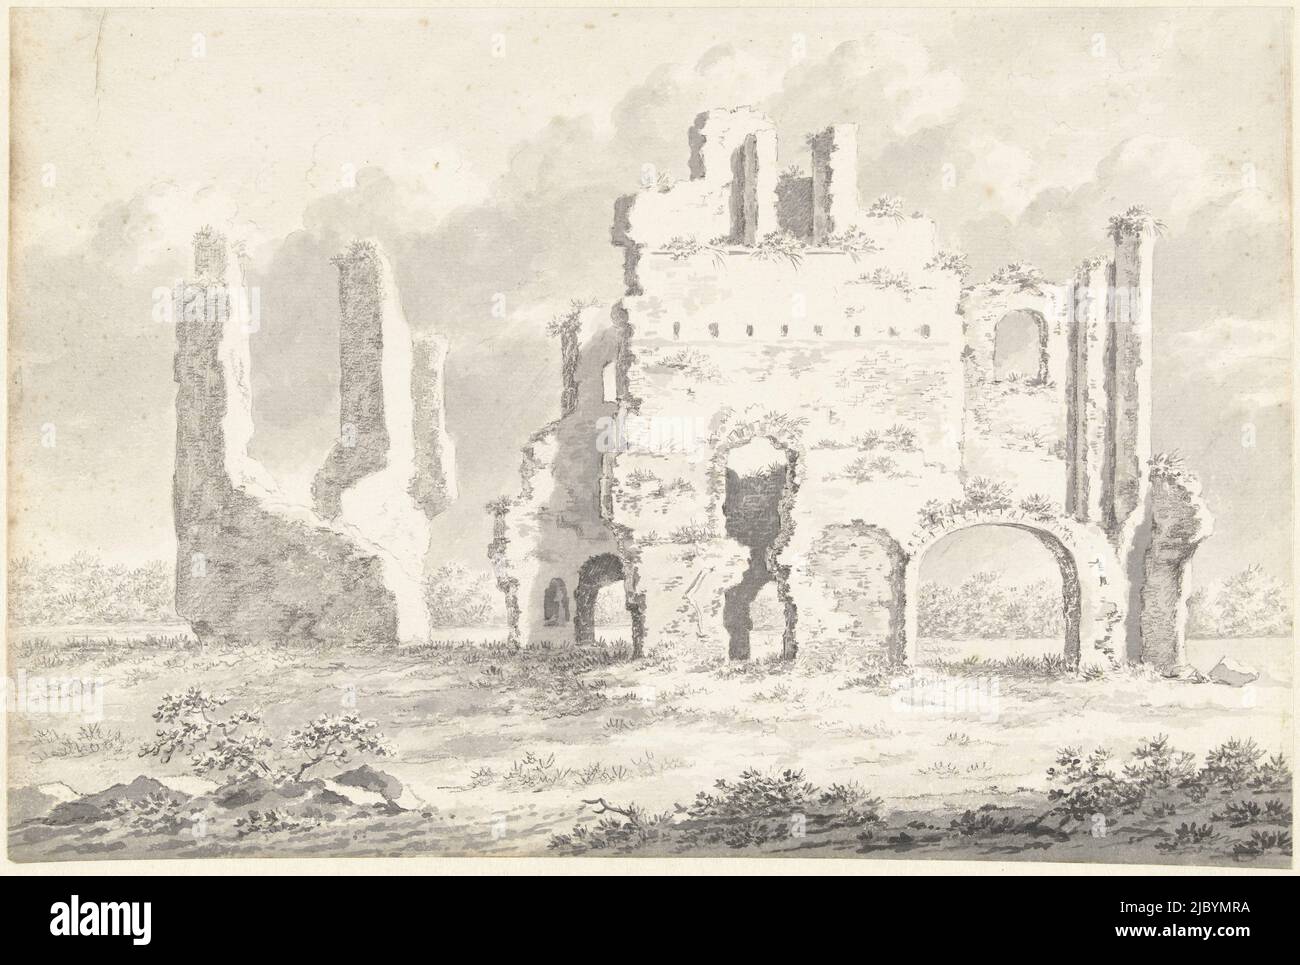 Ruin of the Abbey of Rijnsburg, Gerardus Johannes Verburgh, 1812, draughtsman: Gerardus Johannes Verburgh, 1812, paper, pen, brush, h 224 mm × w 333 mm Stock Photo